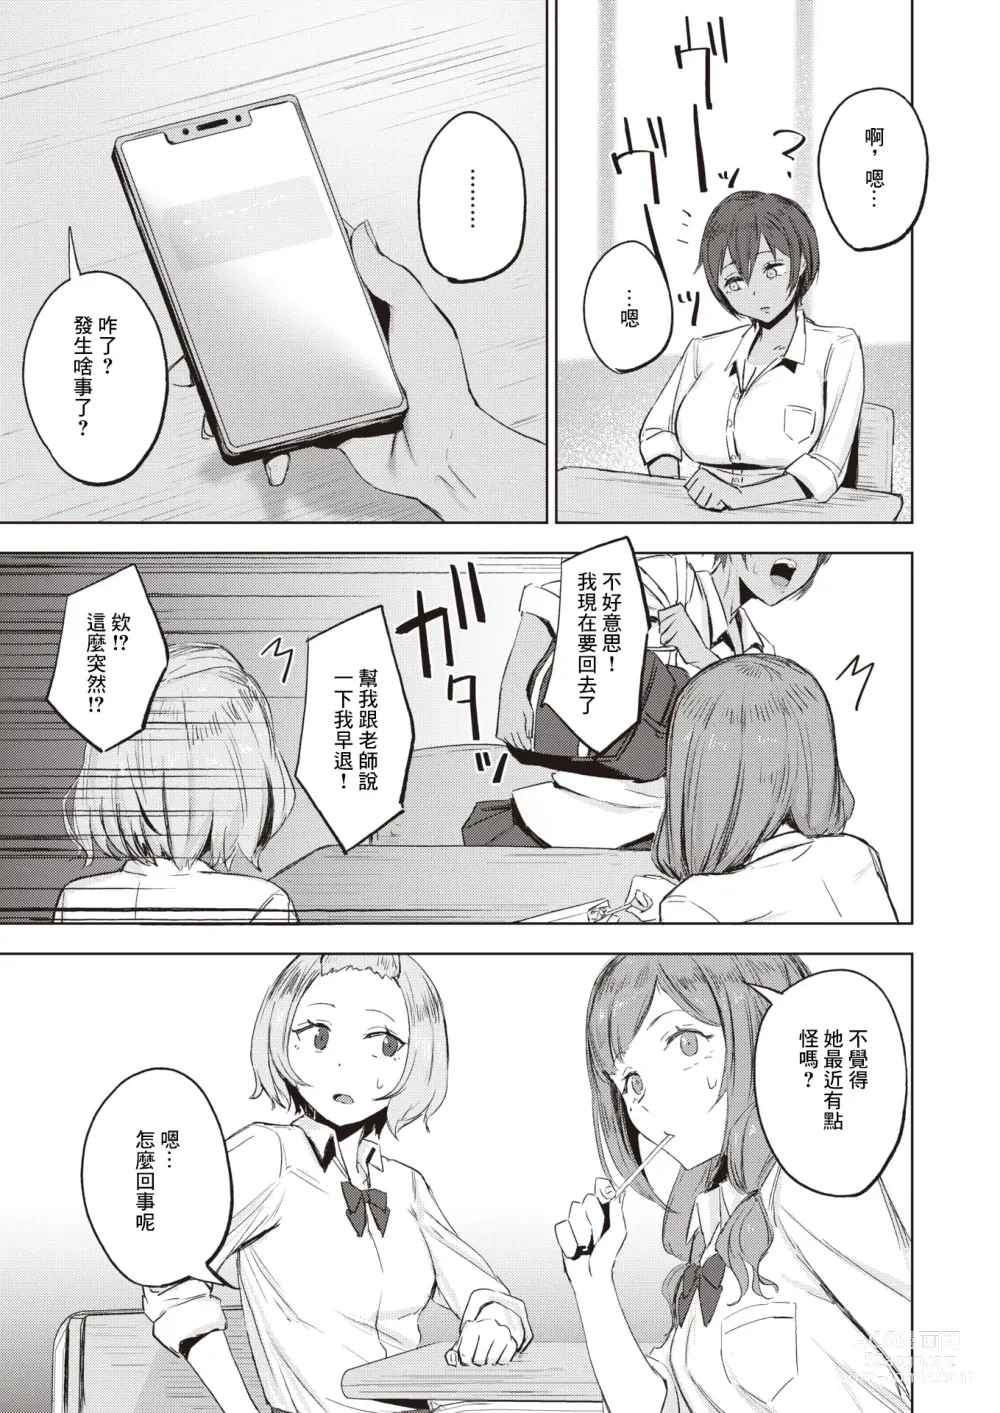 Page 18 of manga Kimochii  Koto  ni wa Sakaraenai - musclehead girl cant resist orgasm